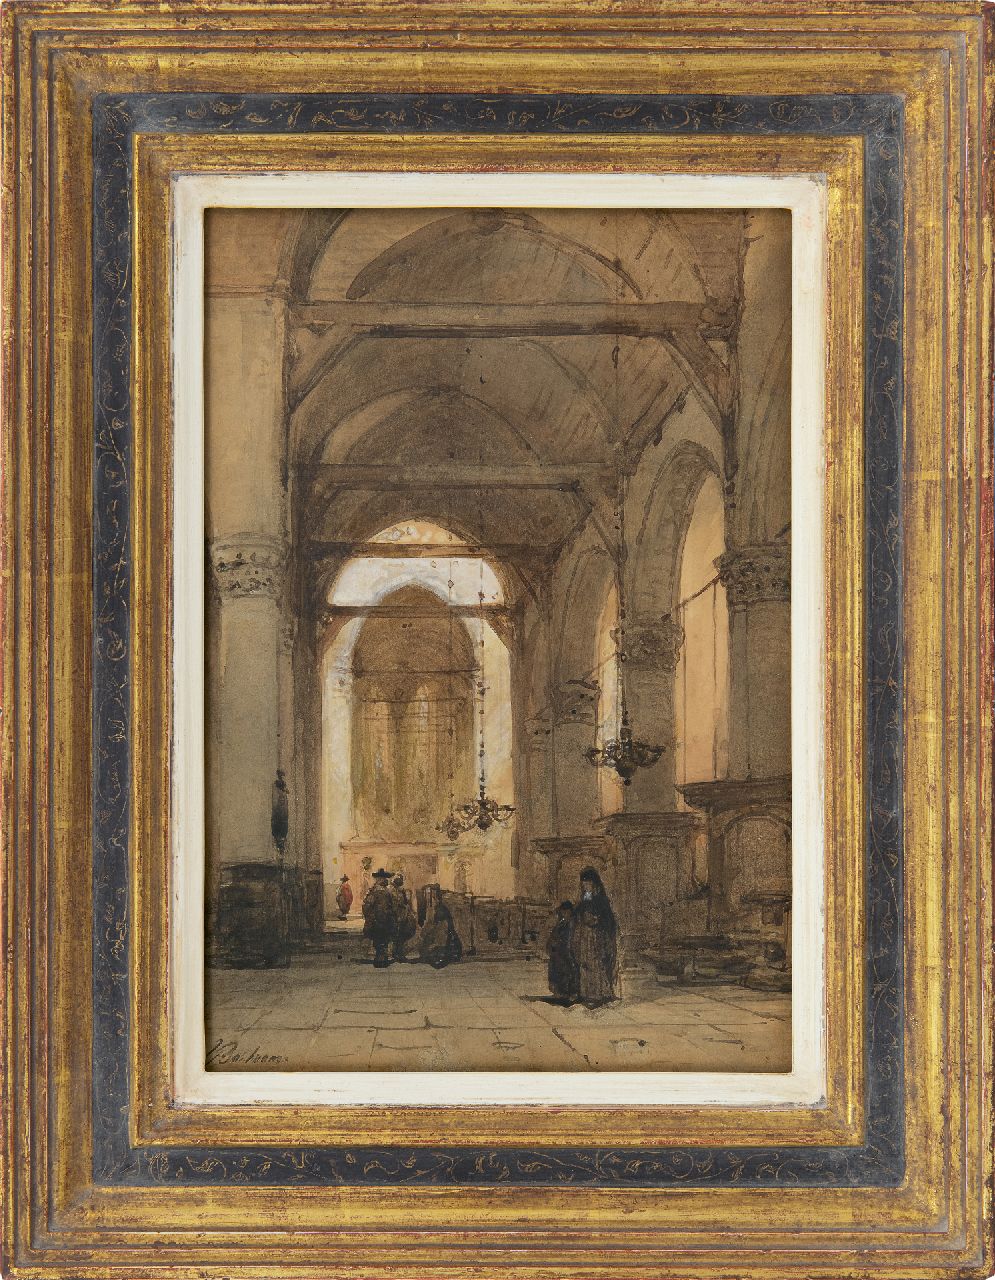 Bosboom J.  | Johannes Bosboom, Figures in a church interior, watercolour on paper 26.5 x 18.3 cm, signed l.l.